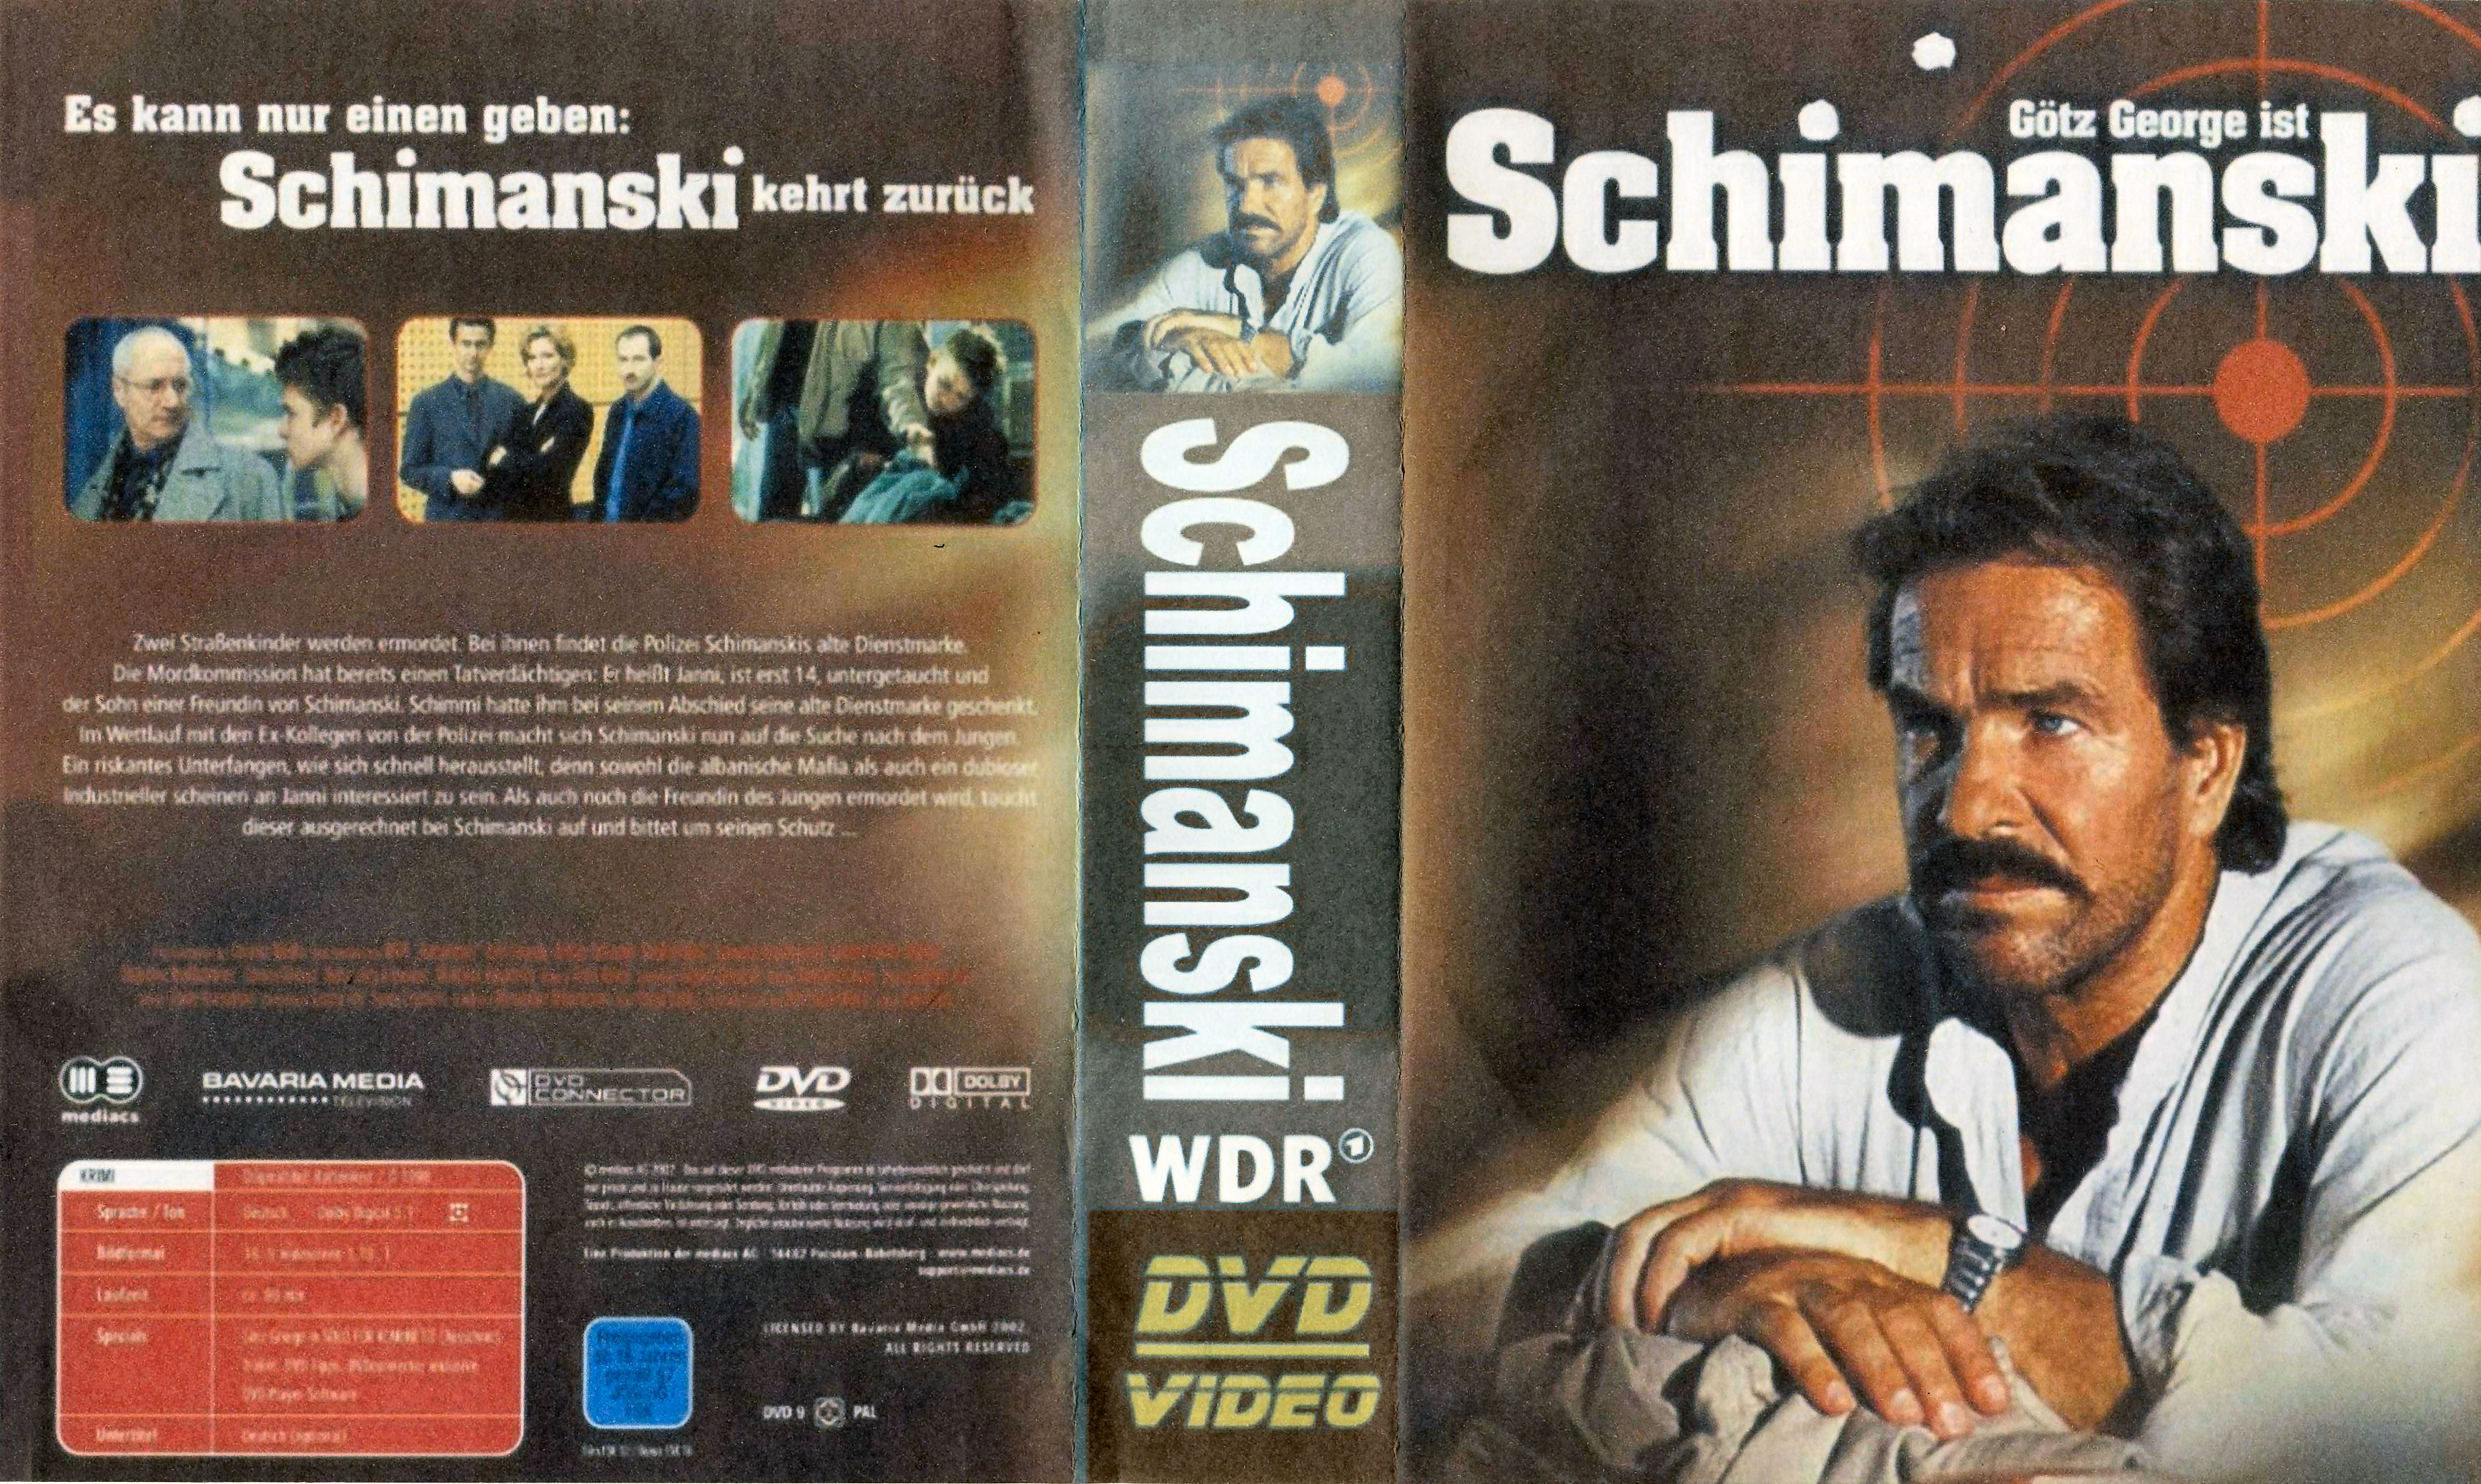 REPOST Schimanski Collectie - DvD 1